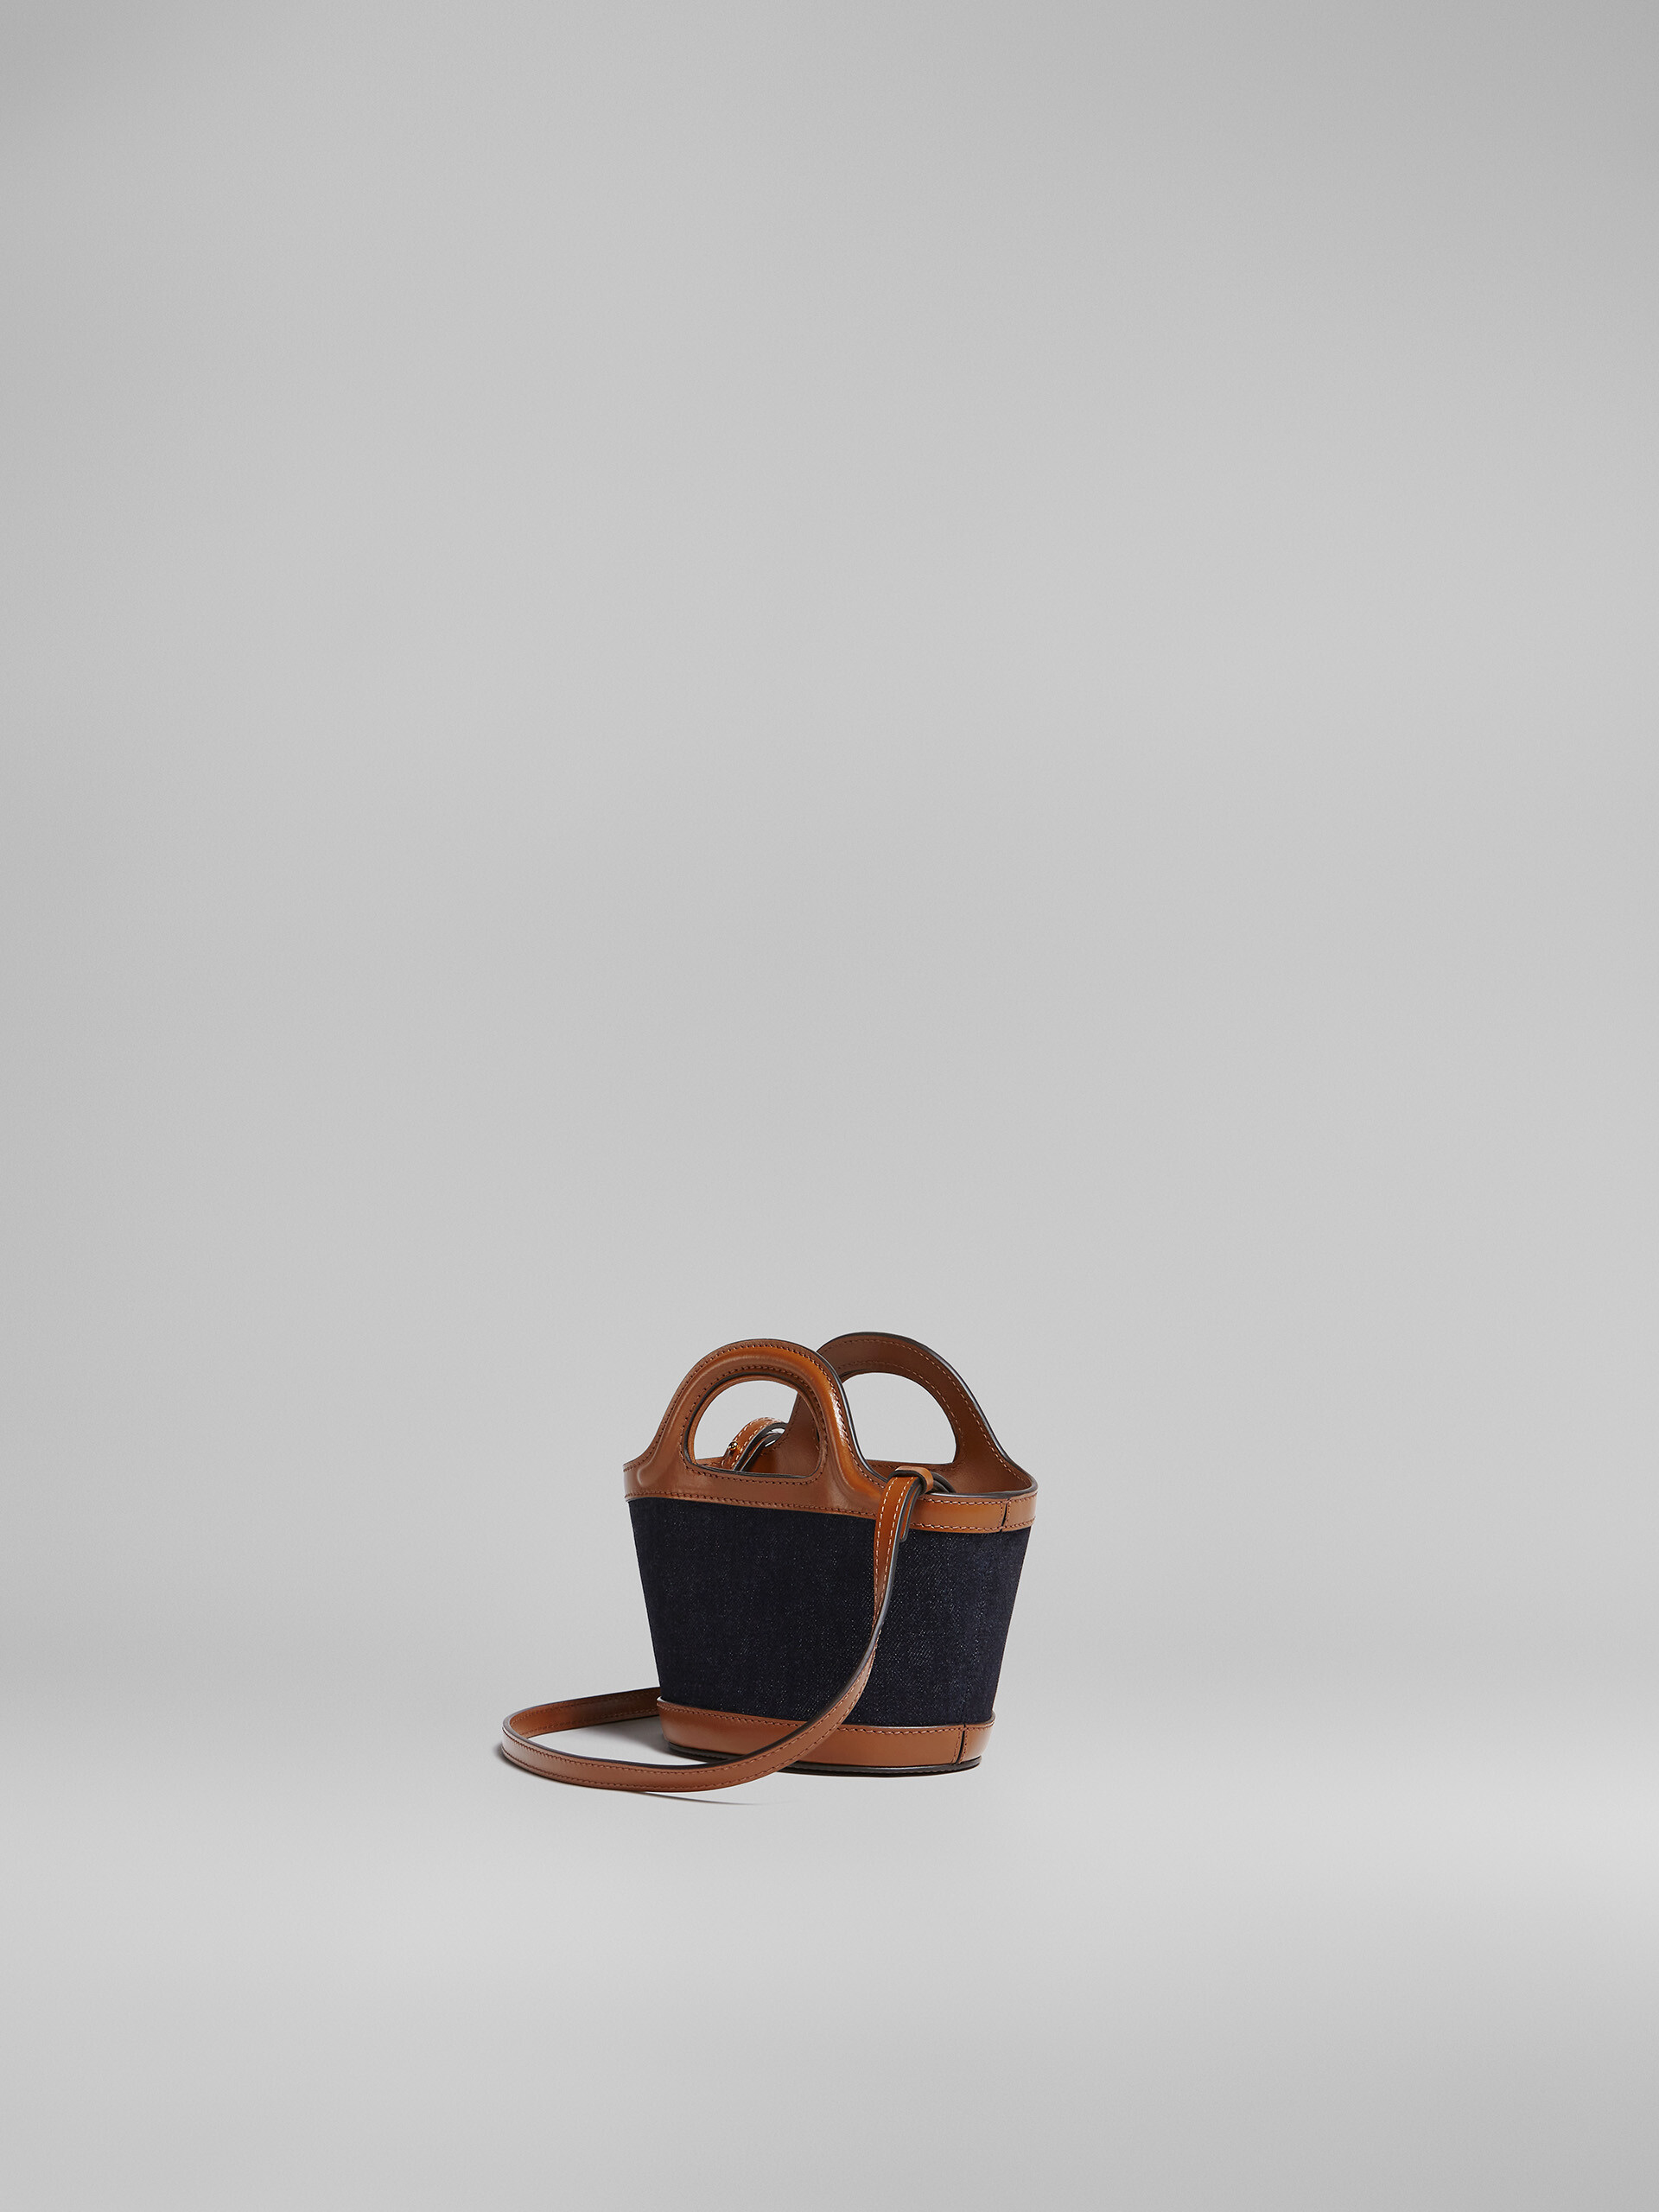 TROPICALIA micro bag in denim and leather - Handbag - Image 3